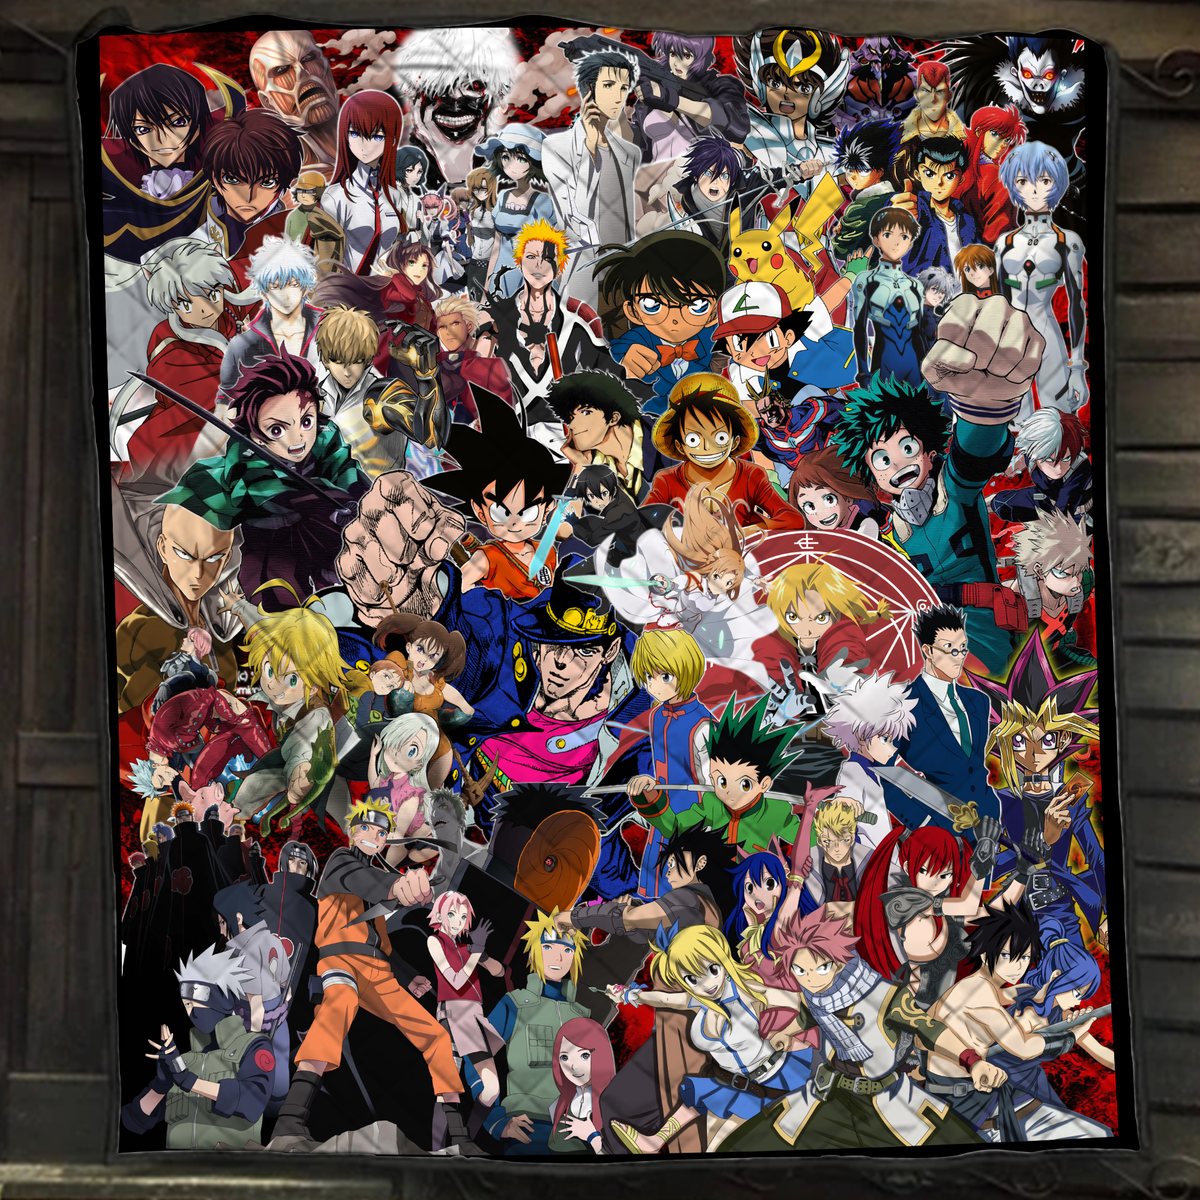 Amazon.com: Yu-Gi-Oh! - Manga/Anime TV Show Poster (Yami Yugi/Characters)  (Size: 24